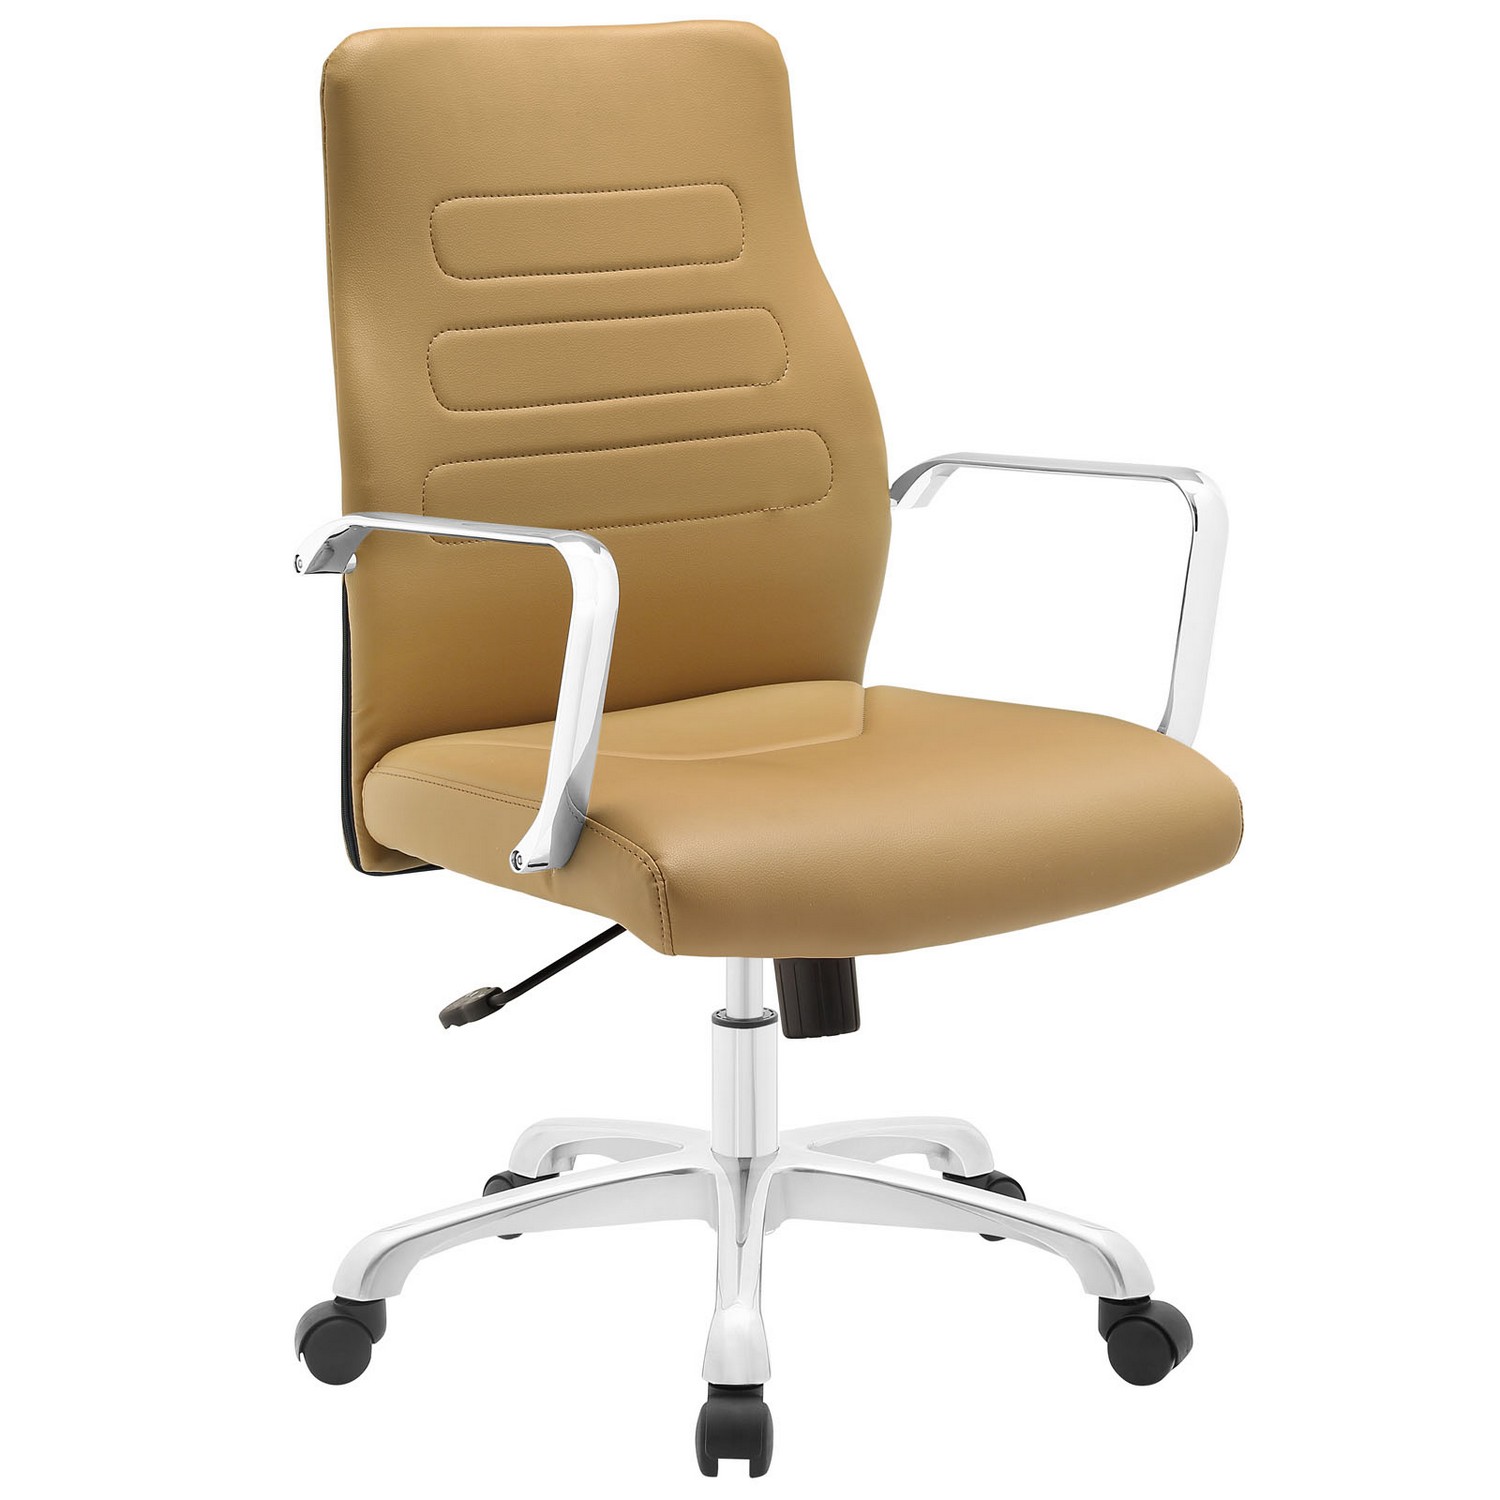 Modway Depict Mid Back Aluminum Office Chair - Tan